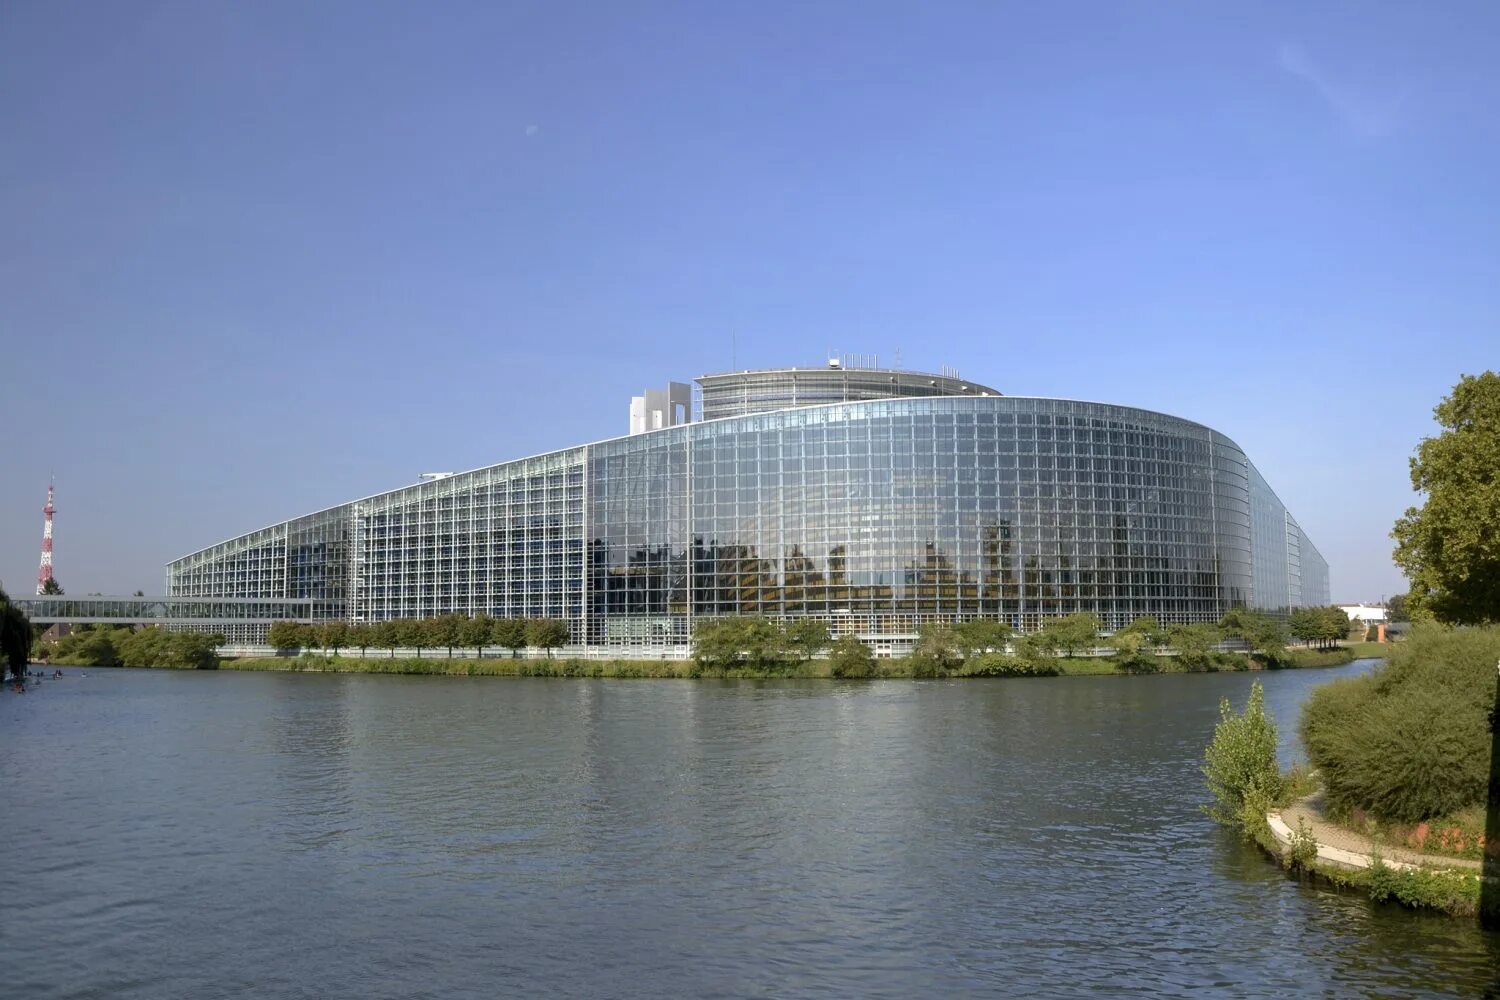 Страсбург Европарламент. Здание европейского парламента в Страсбурге. Дворец конгрессов в Страсбурге. Европейский парламент в Strasbourg.